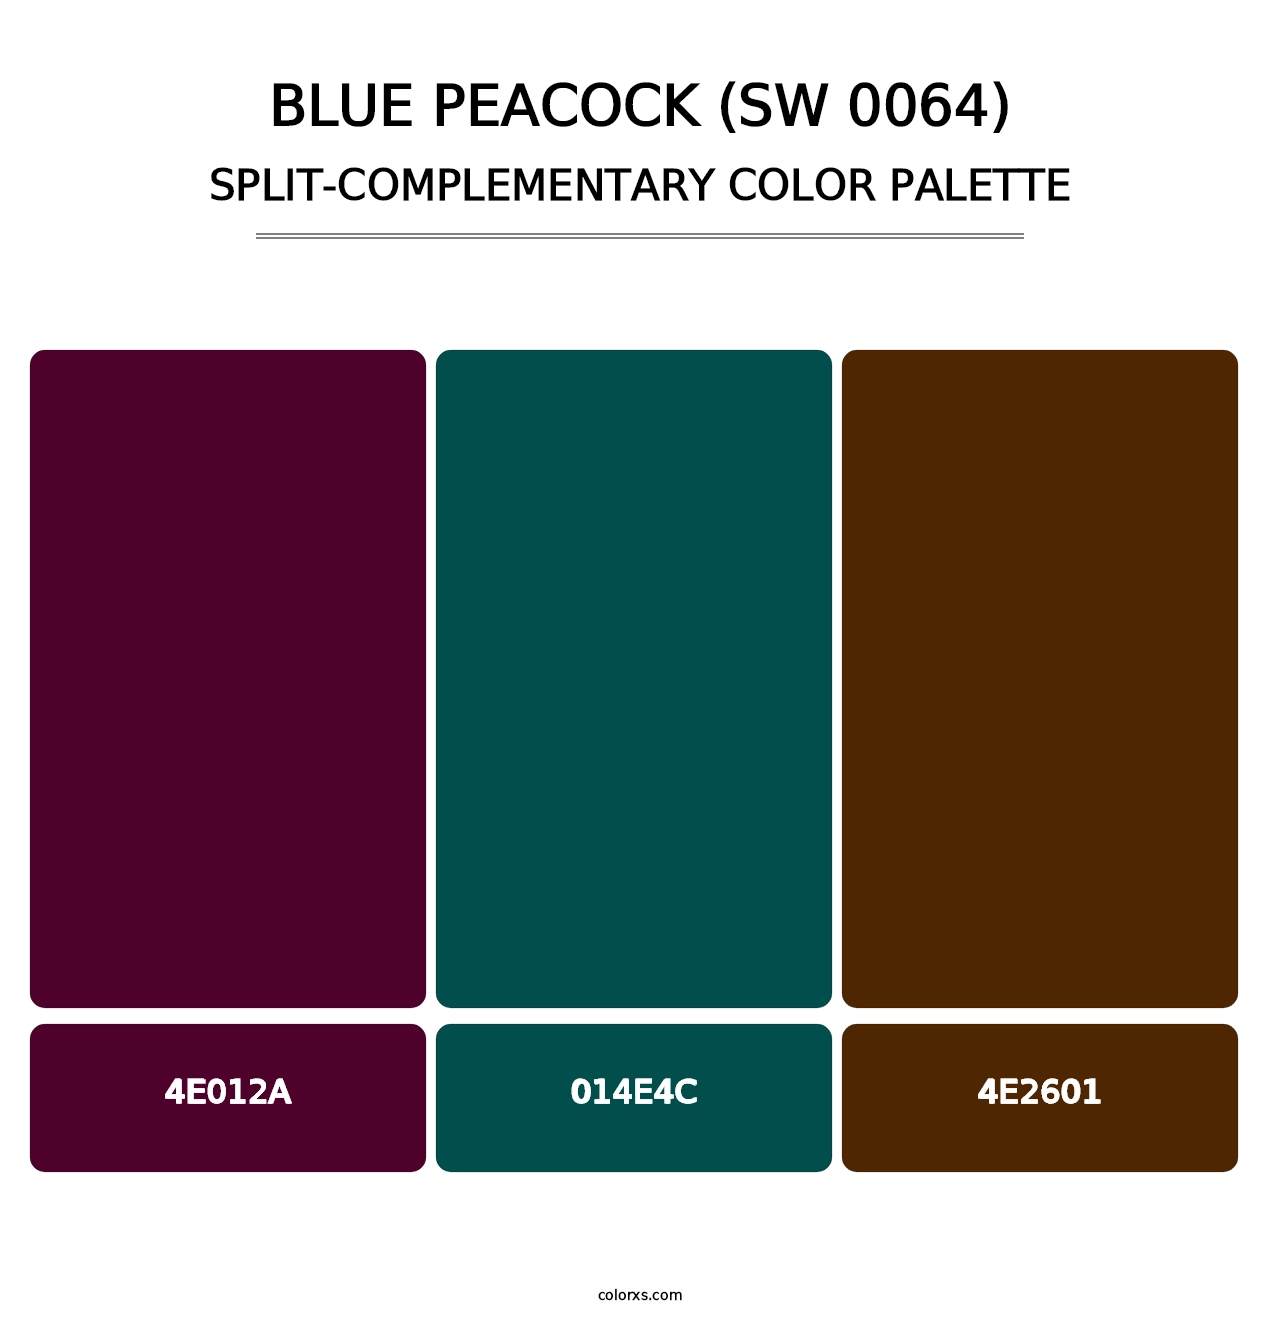 Blue Peacock (SW 0064) - Split-Complementary Color Palette